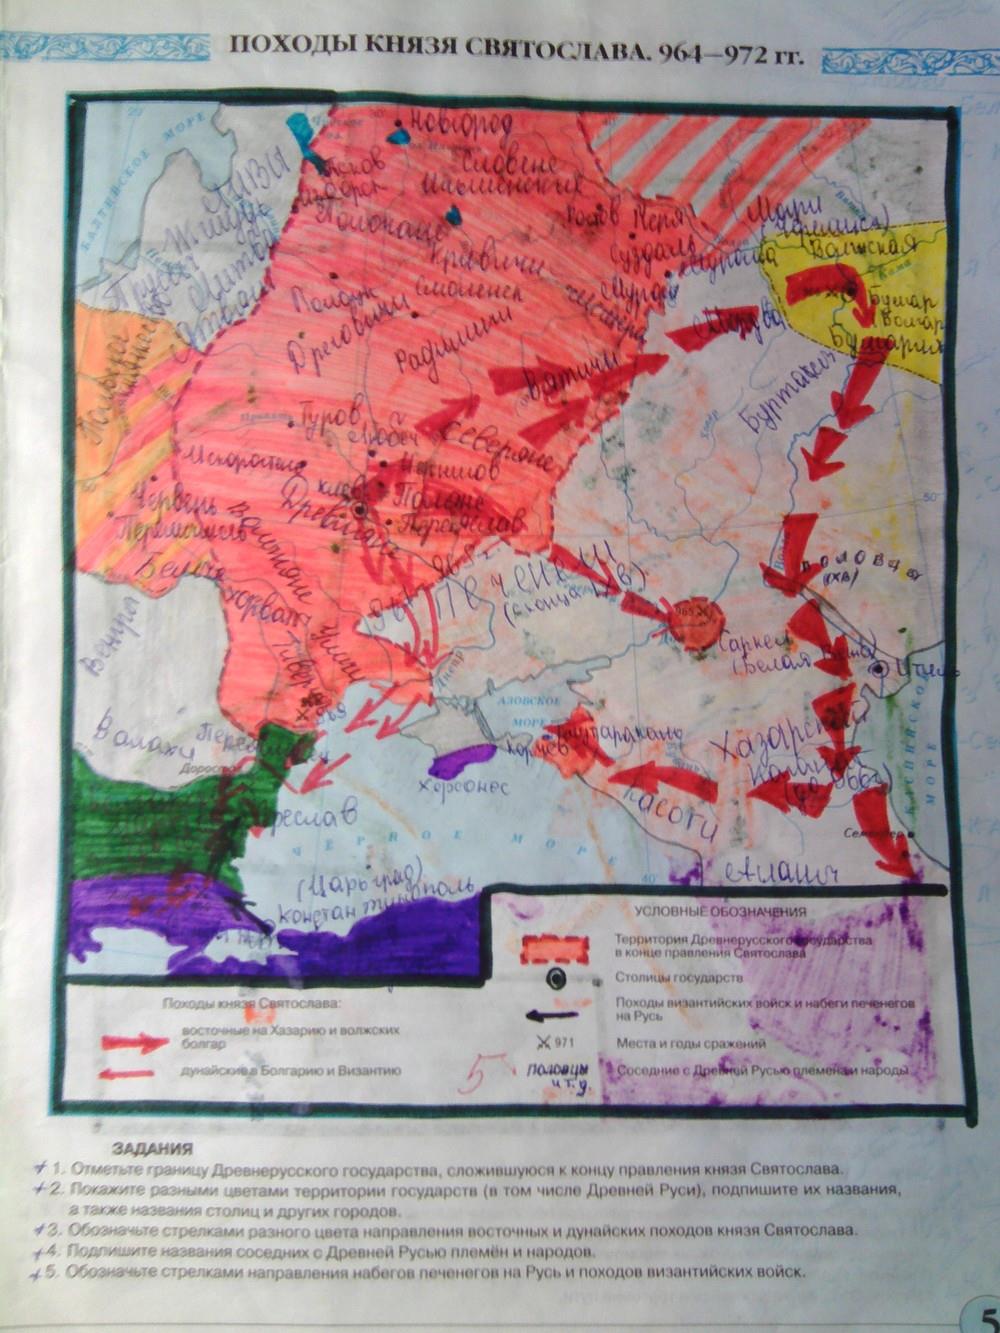 Походы князя Святослава контурная карта